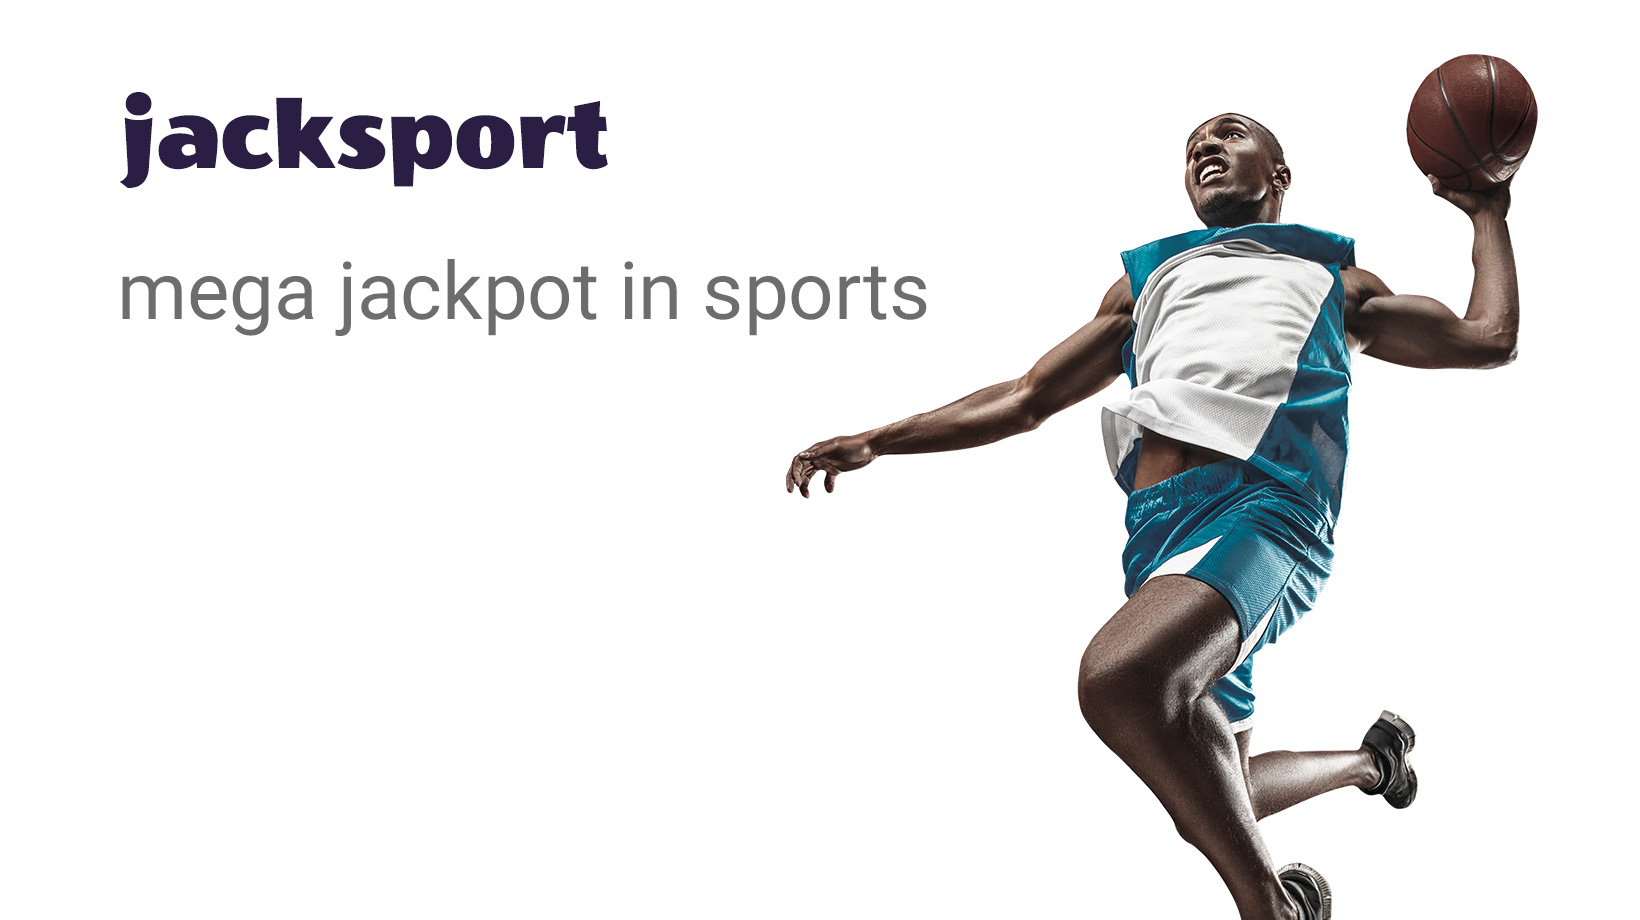 Jacksport mega jackpot in sports